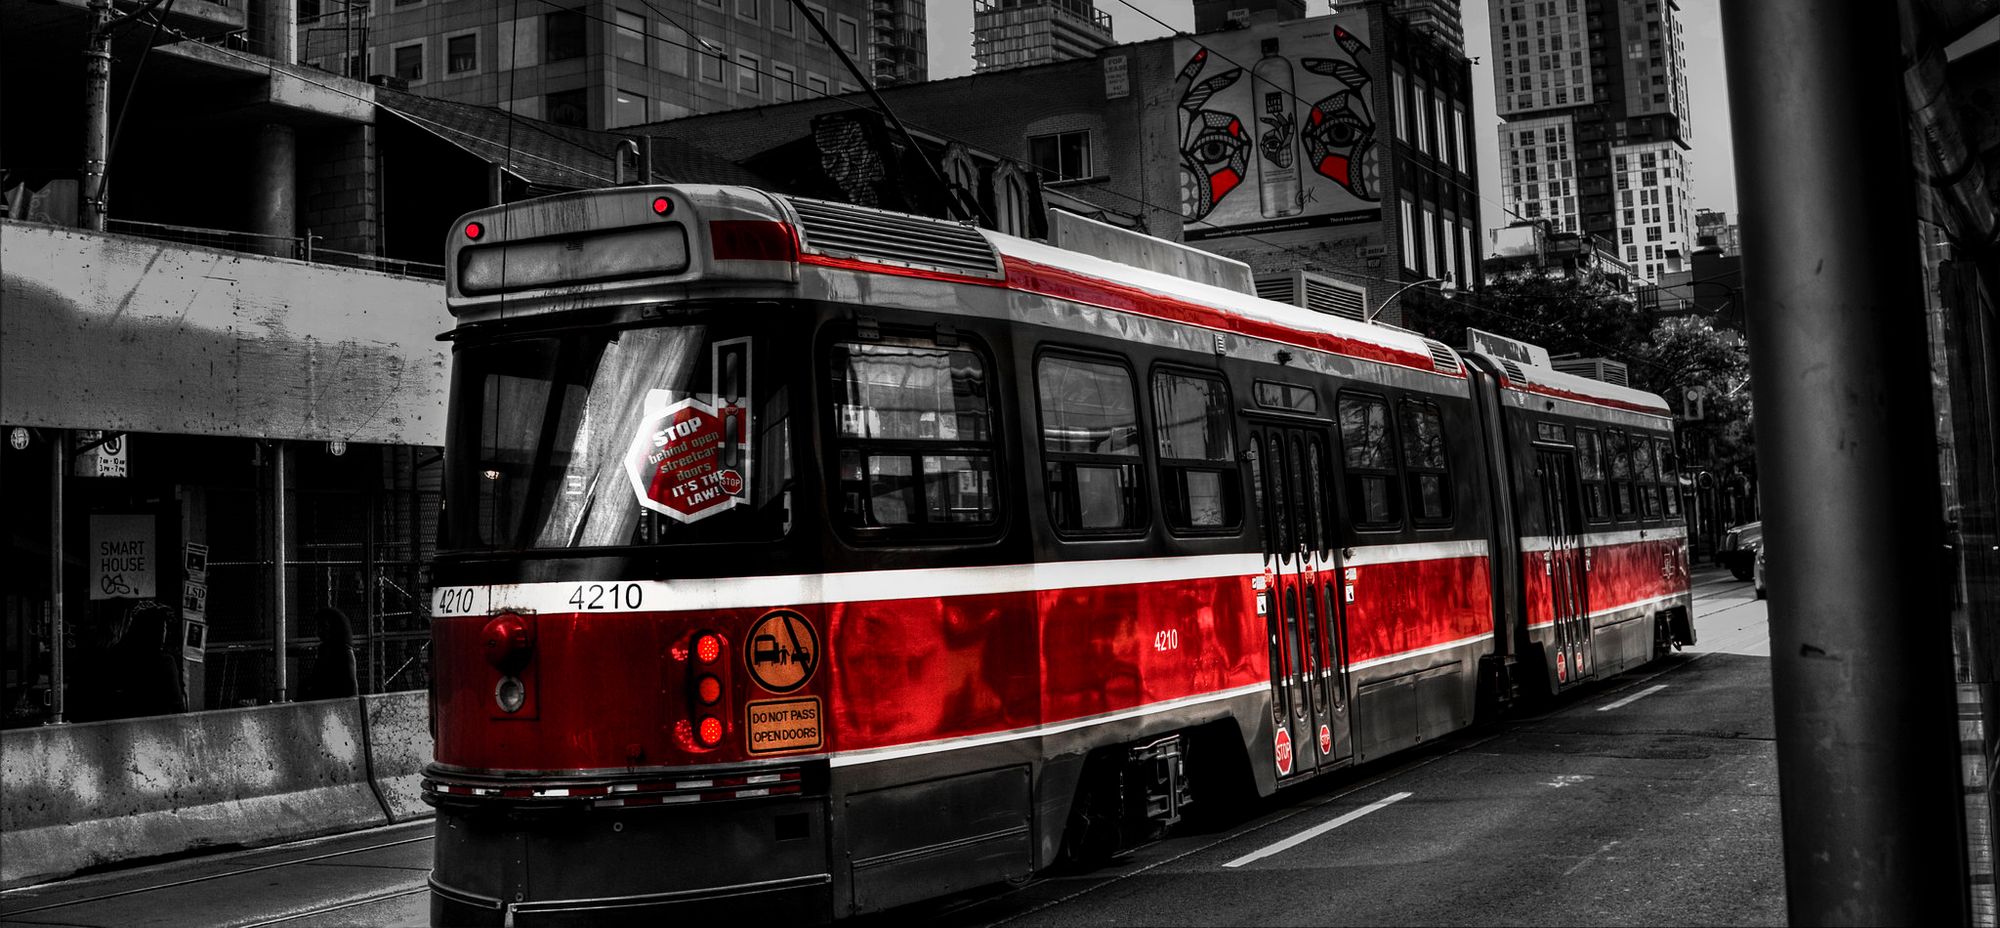 Toronto TTC by @koczkodan (Flickr) is licensed under CC BY 2.0